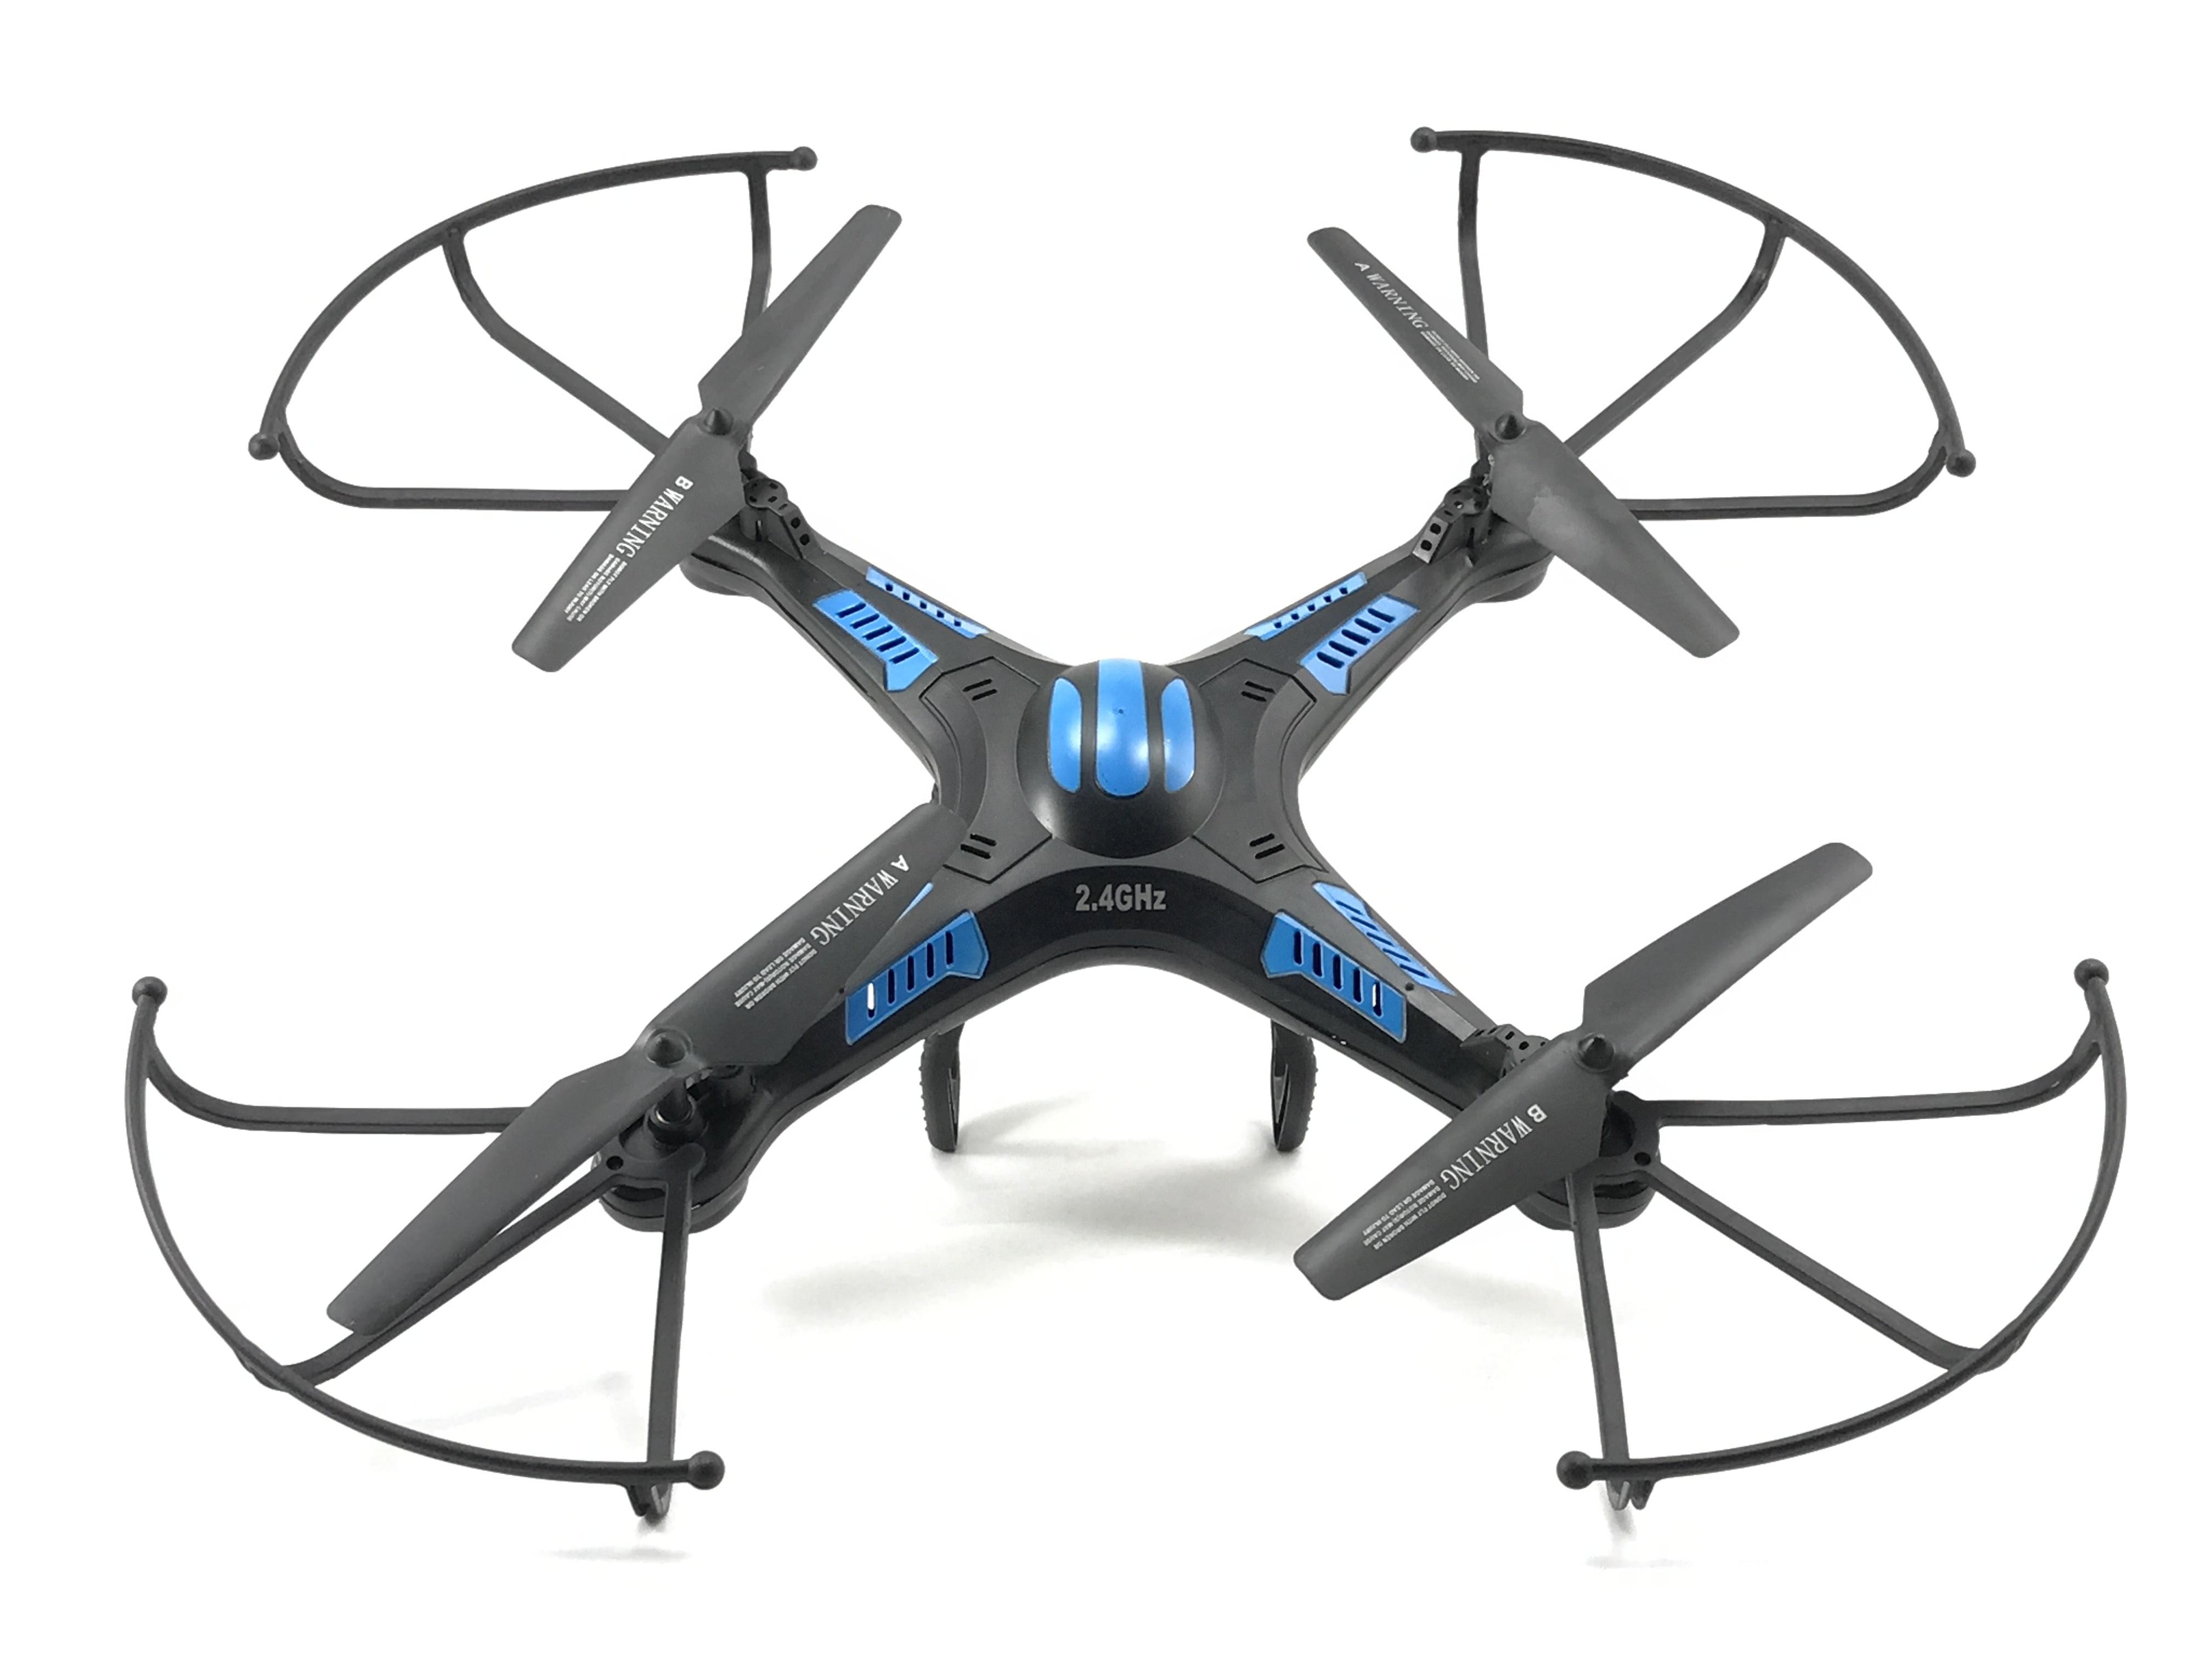 Kingco Quadcopter Vision Drone: User-friendly features of the Kingco Quadcopter Vision Drone